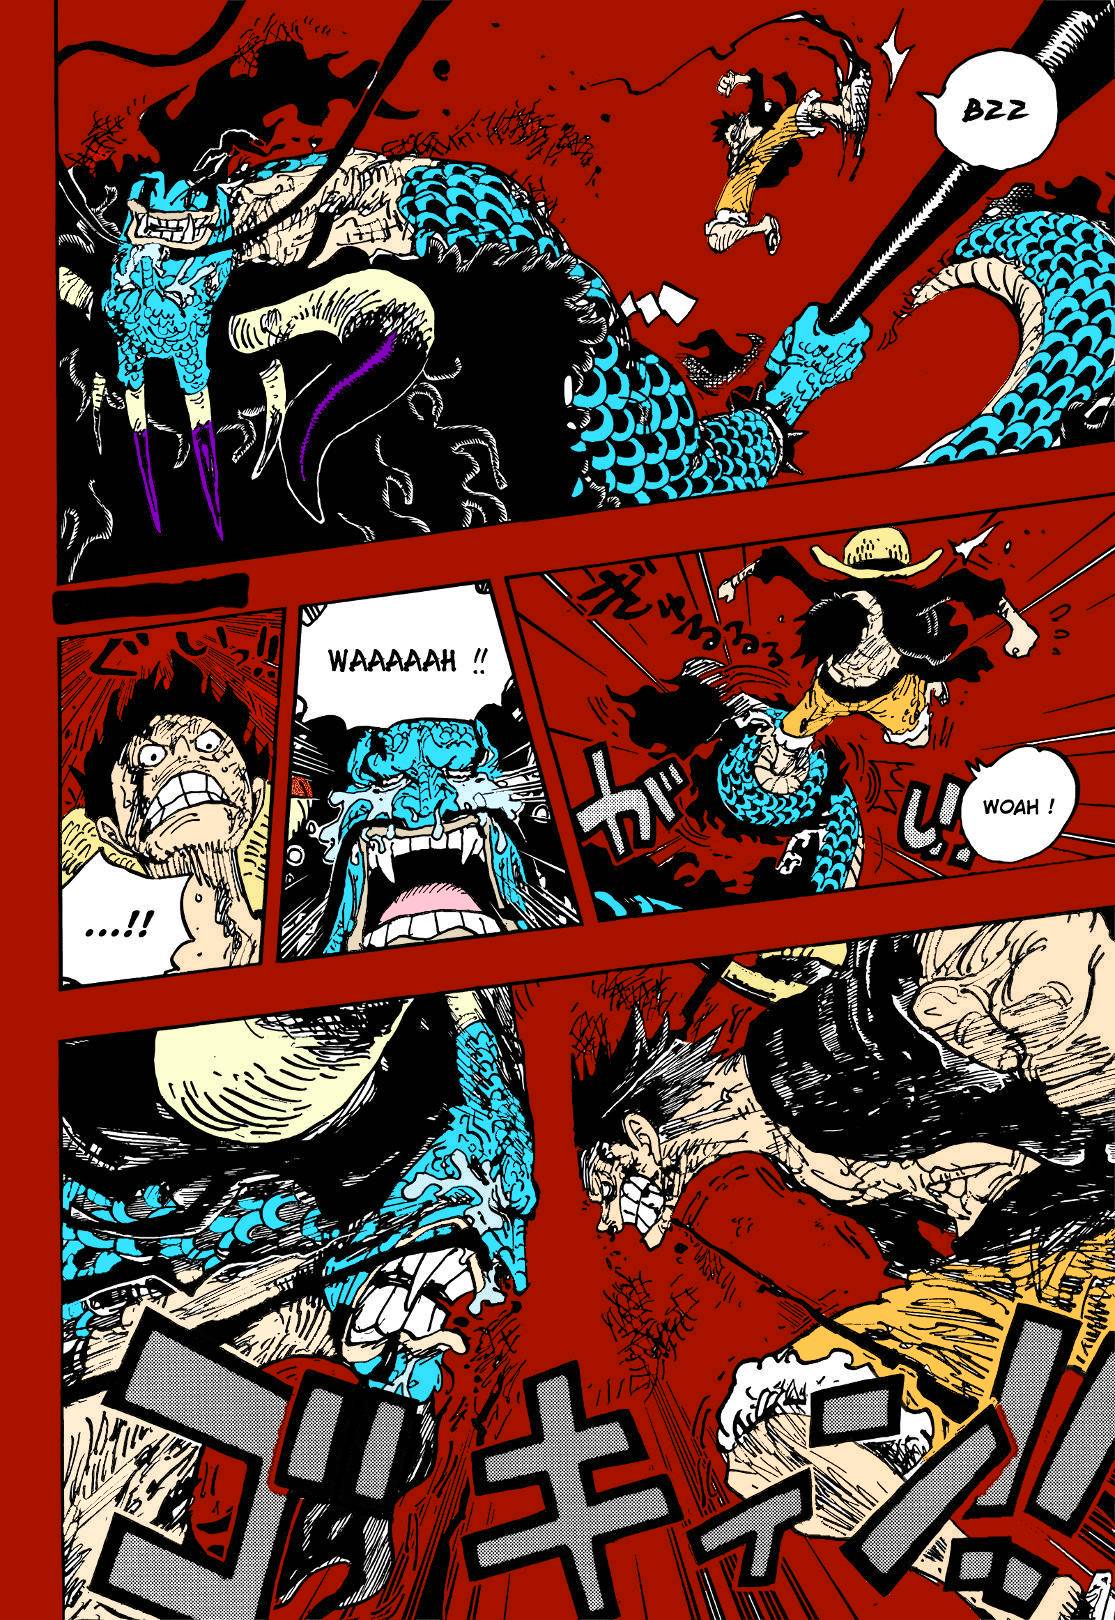 One Piece 1037 - Luffy vs Kaido by Melonciutus on DeviantArt